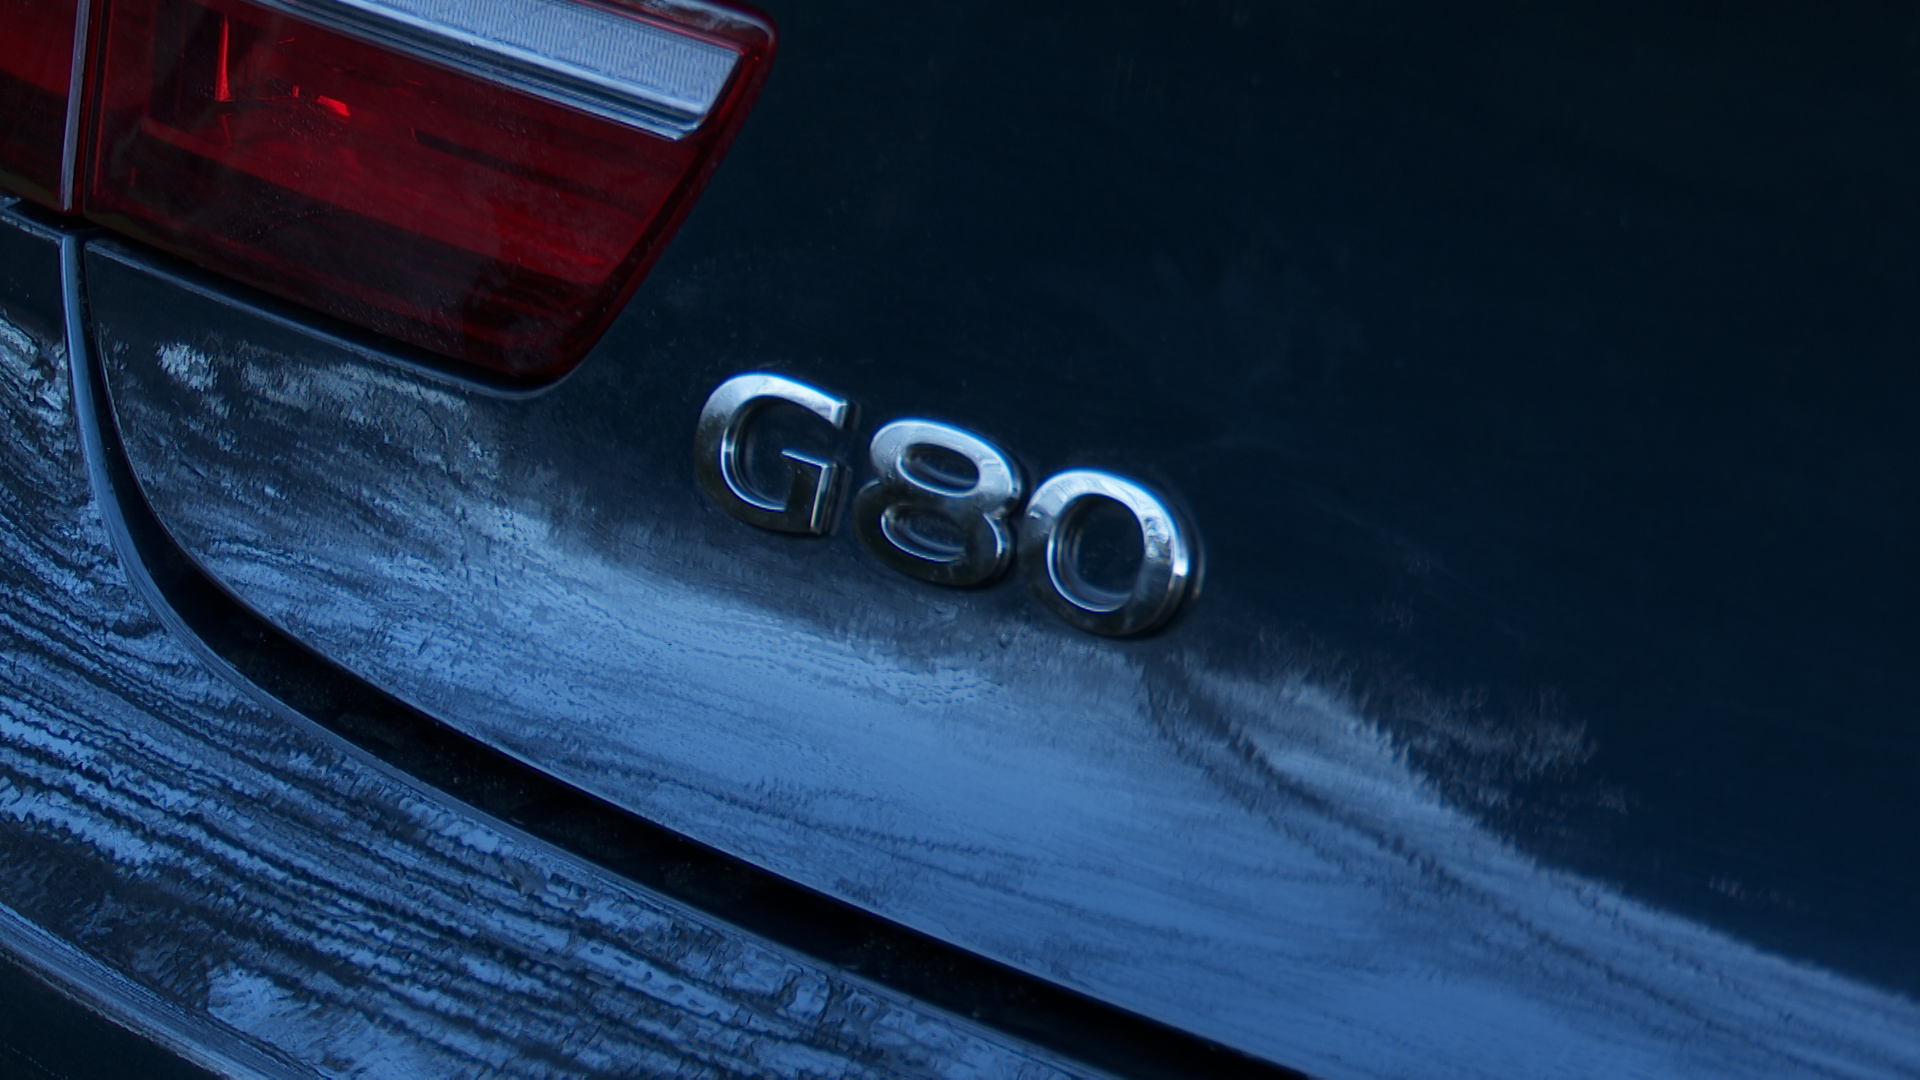 GENESIS G80 SALOON 2.5T Premium Line 4dr Auto AWD [Innovation Pack]